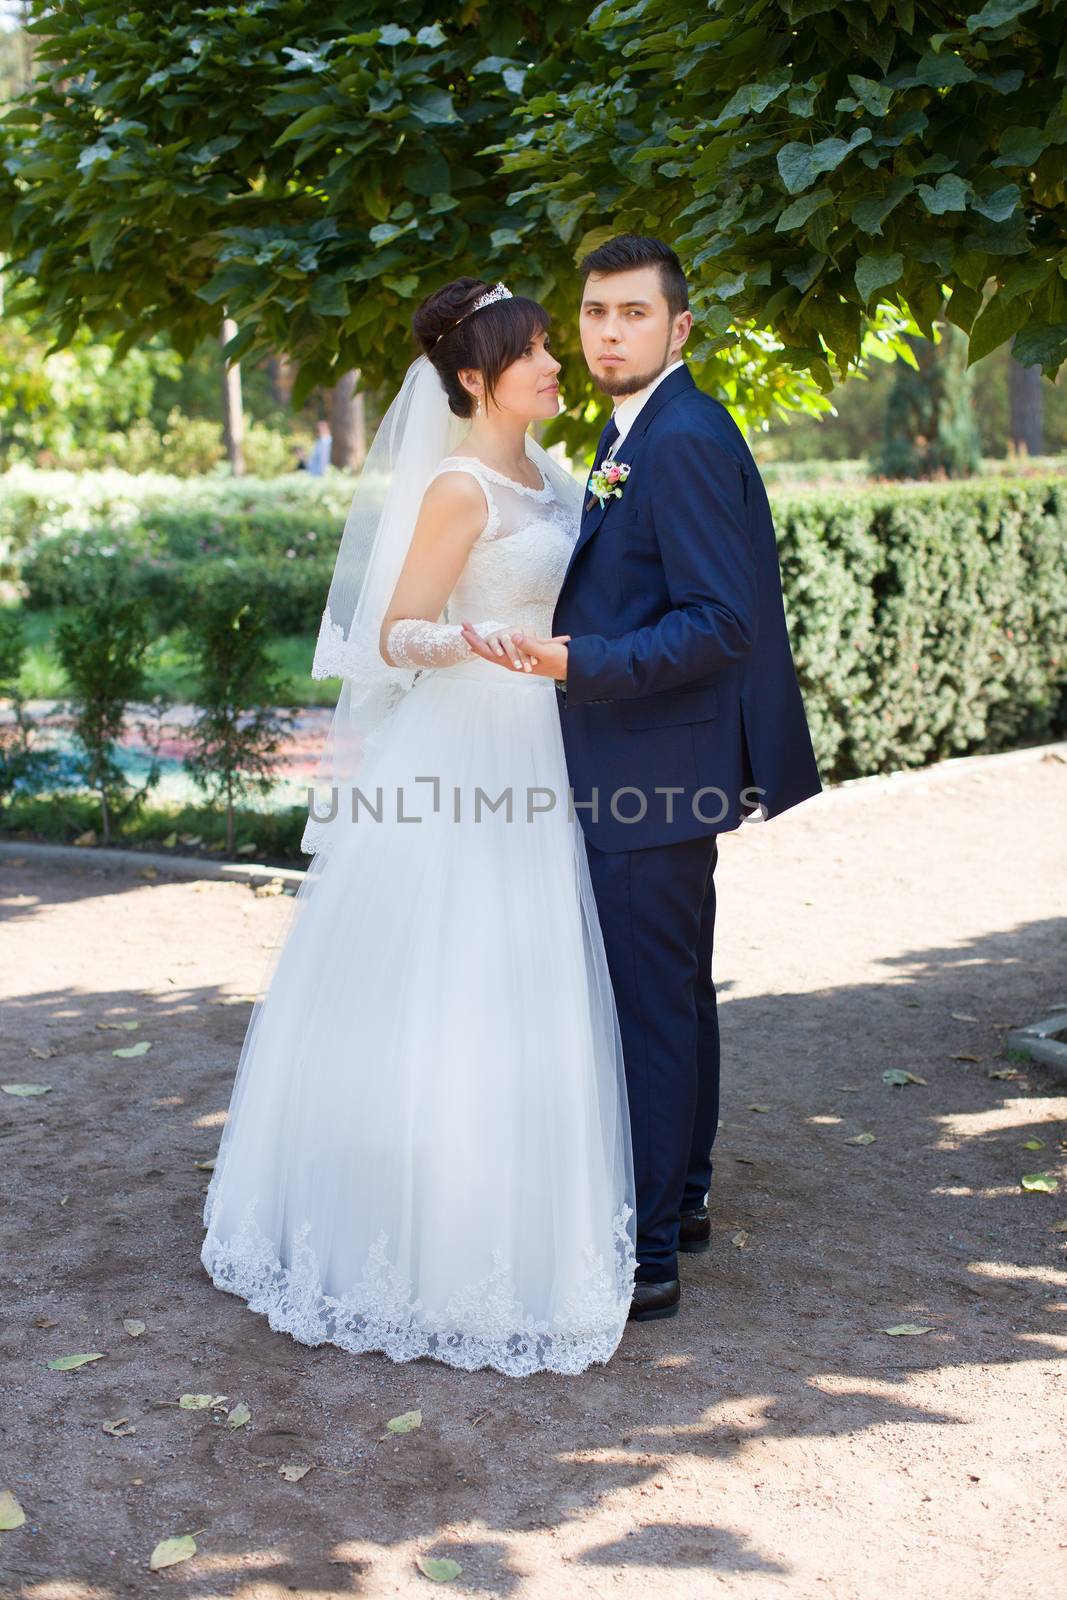 Stylish newlyweds on their wedding day by lanser314